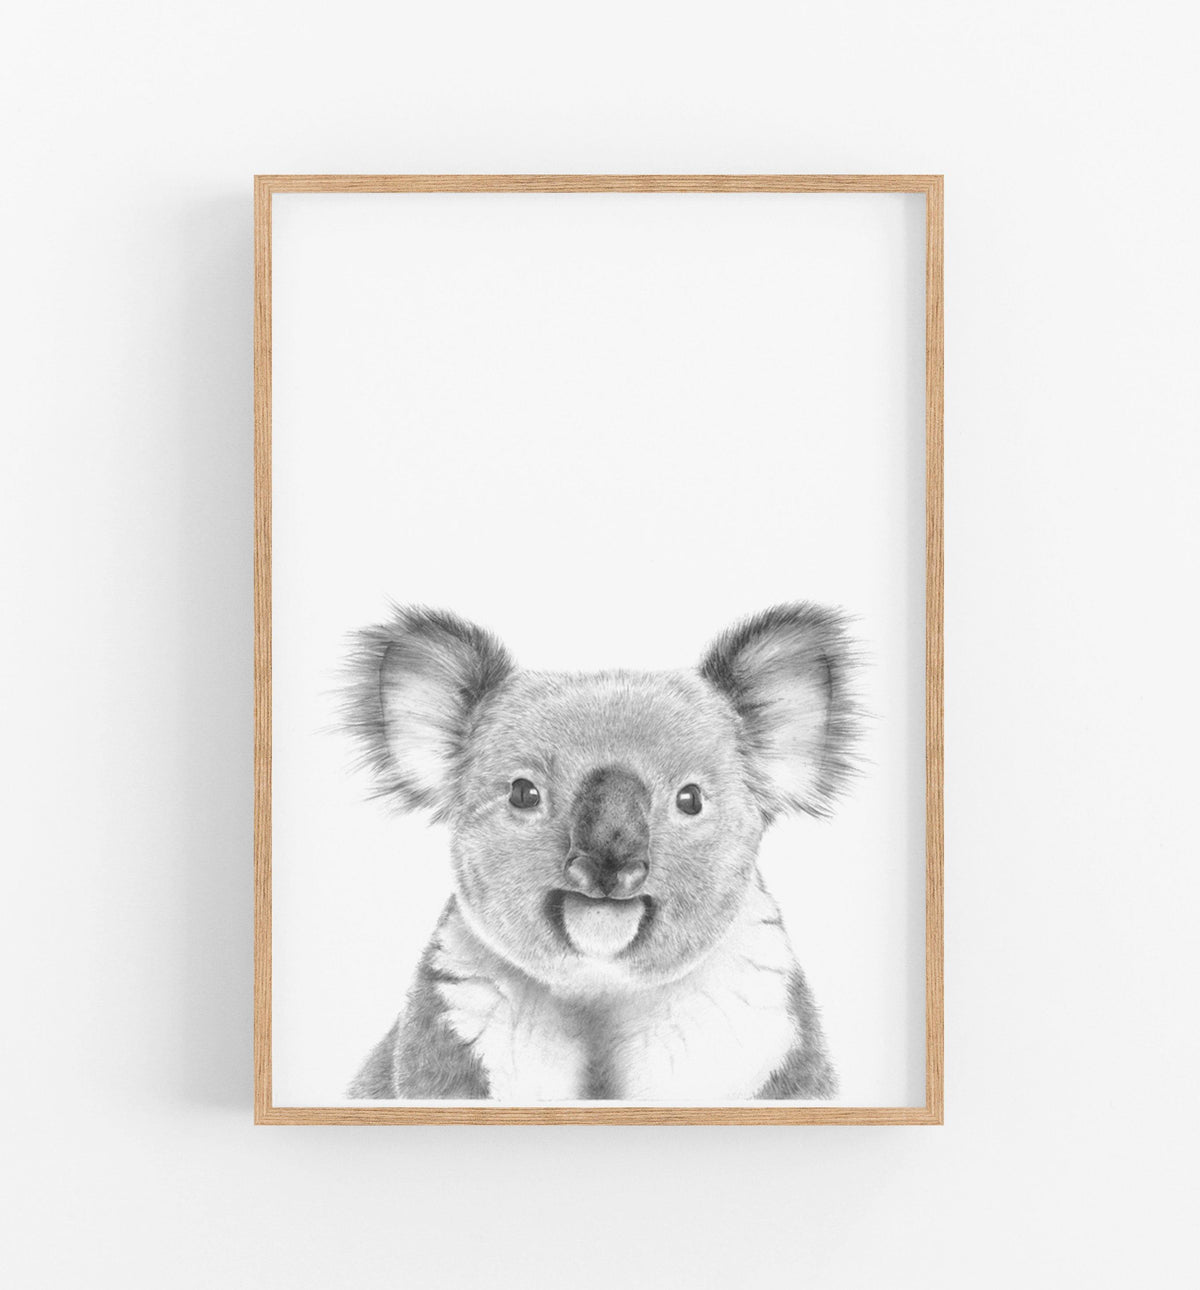 Koala Wall Art Print - Wild Wares